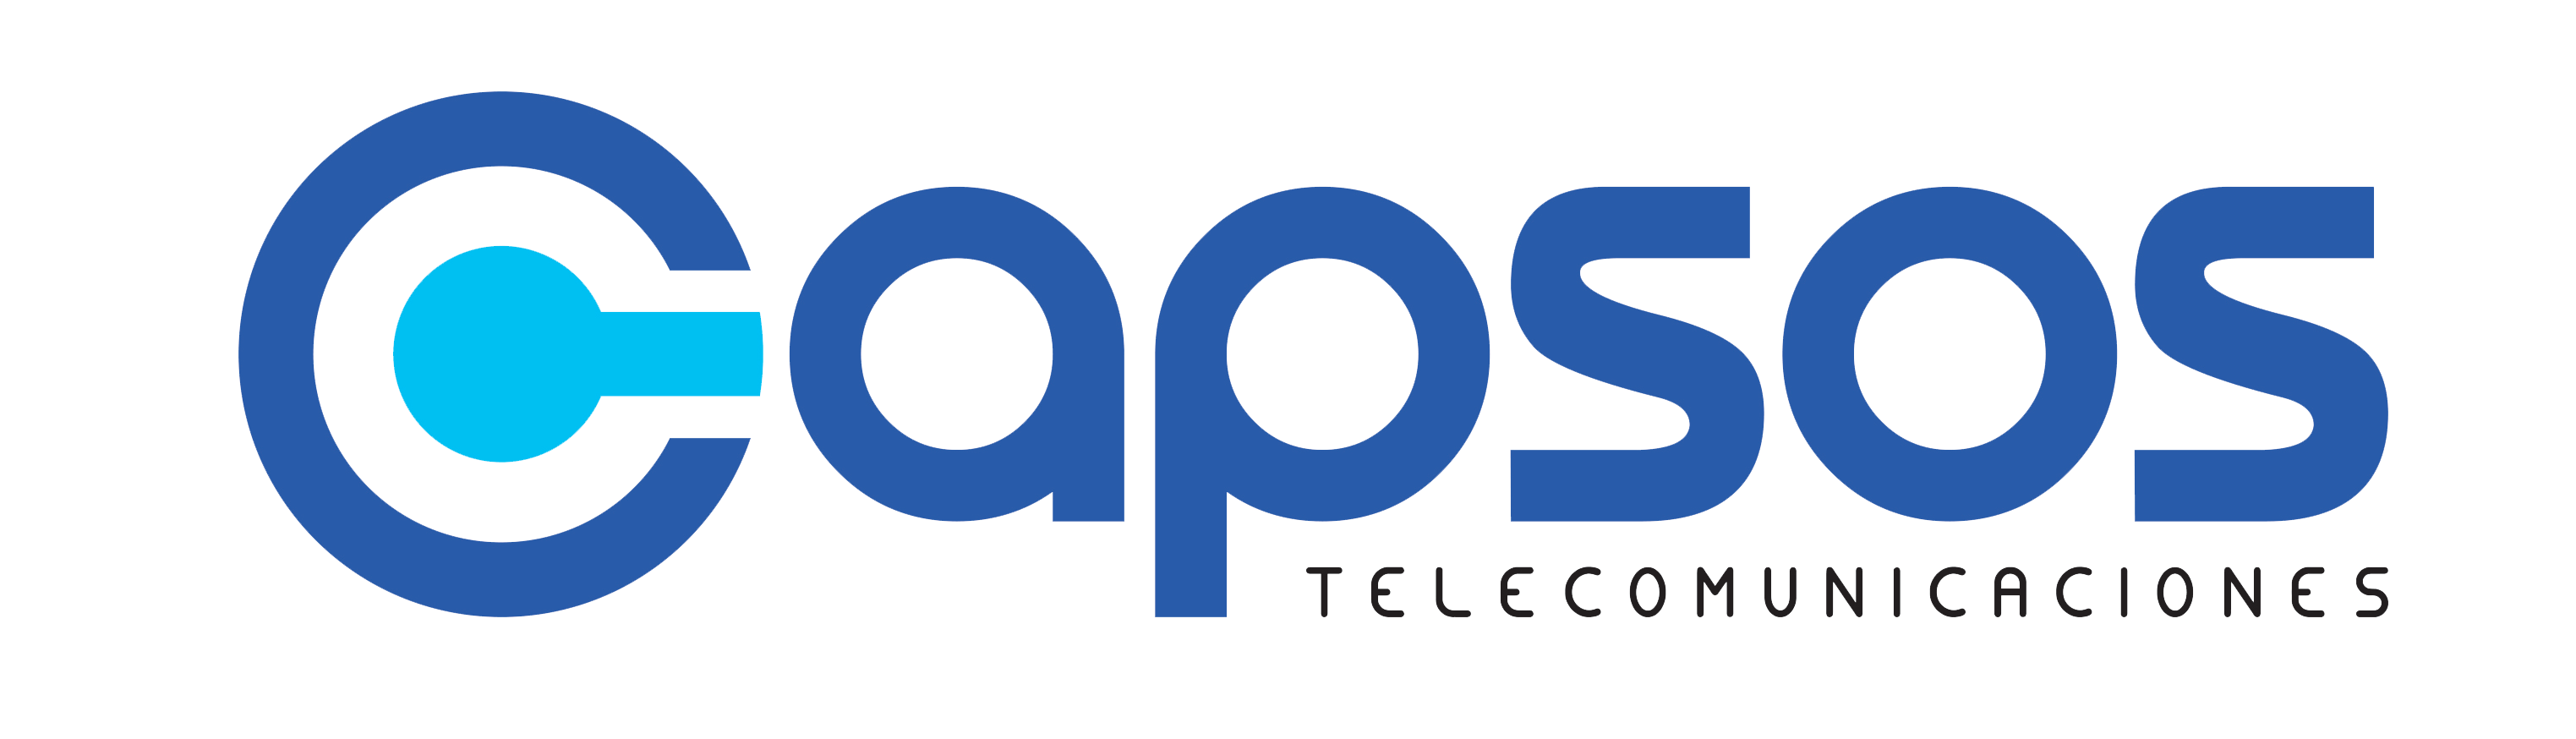 CAPSOS Telecomunicaciones